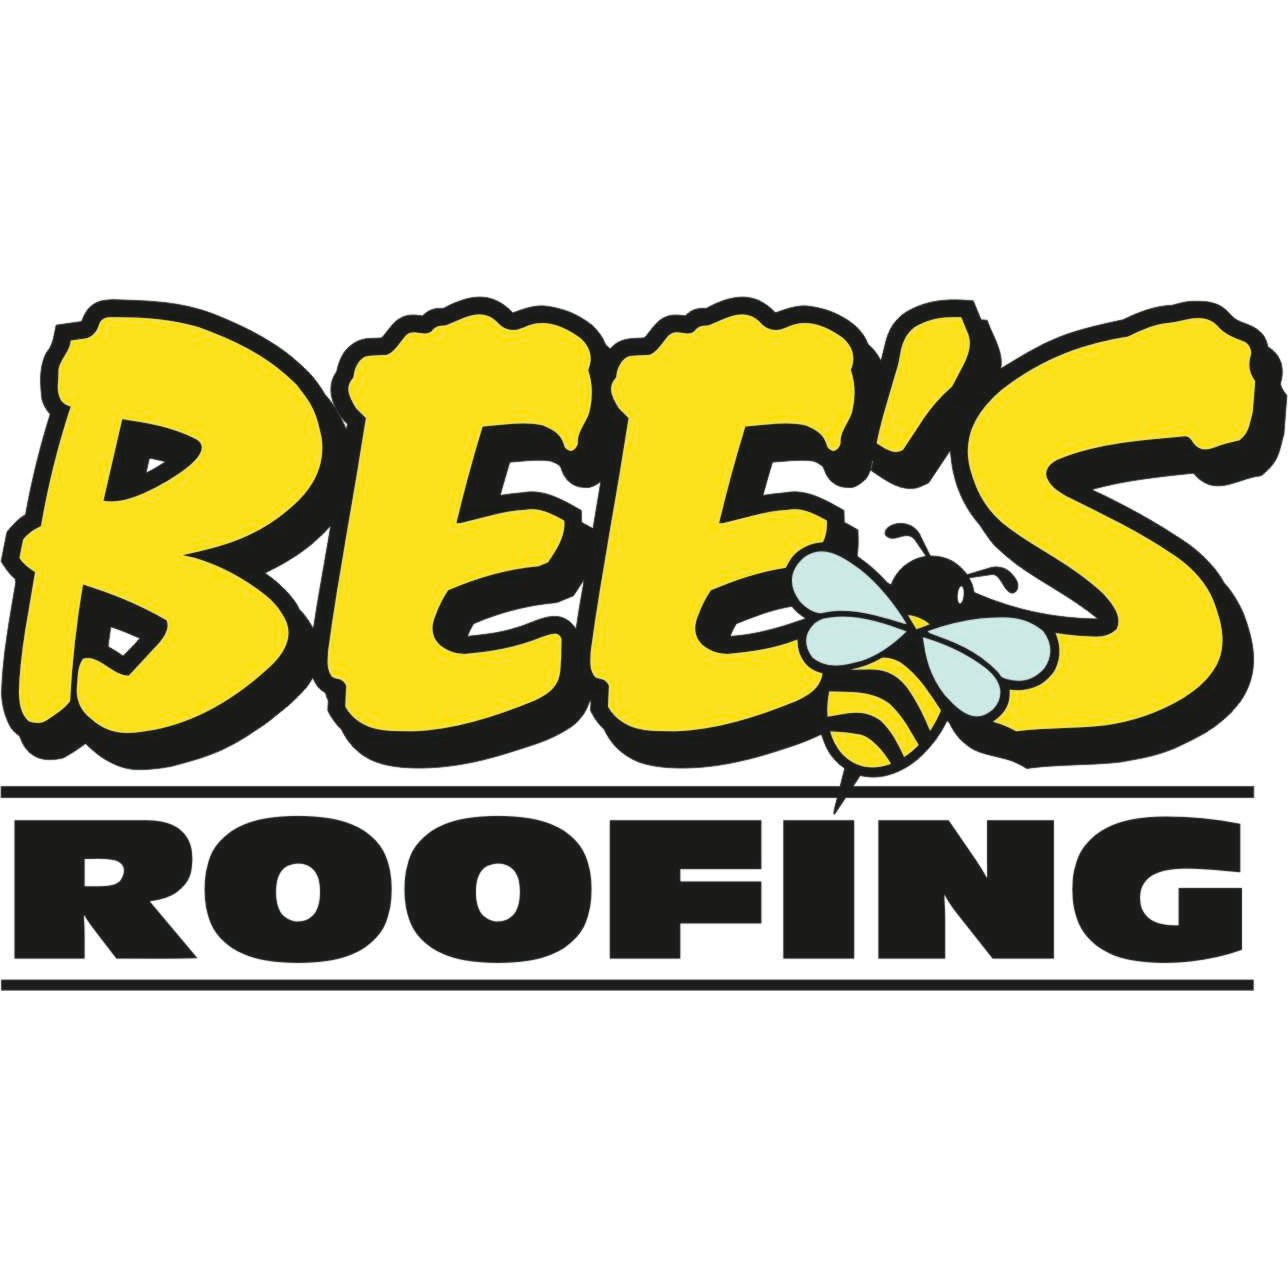 Bee's Roofing Logo